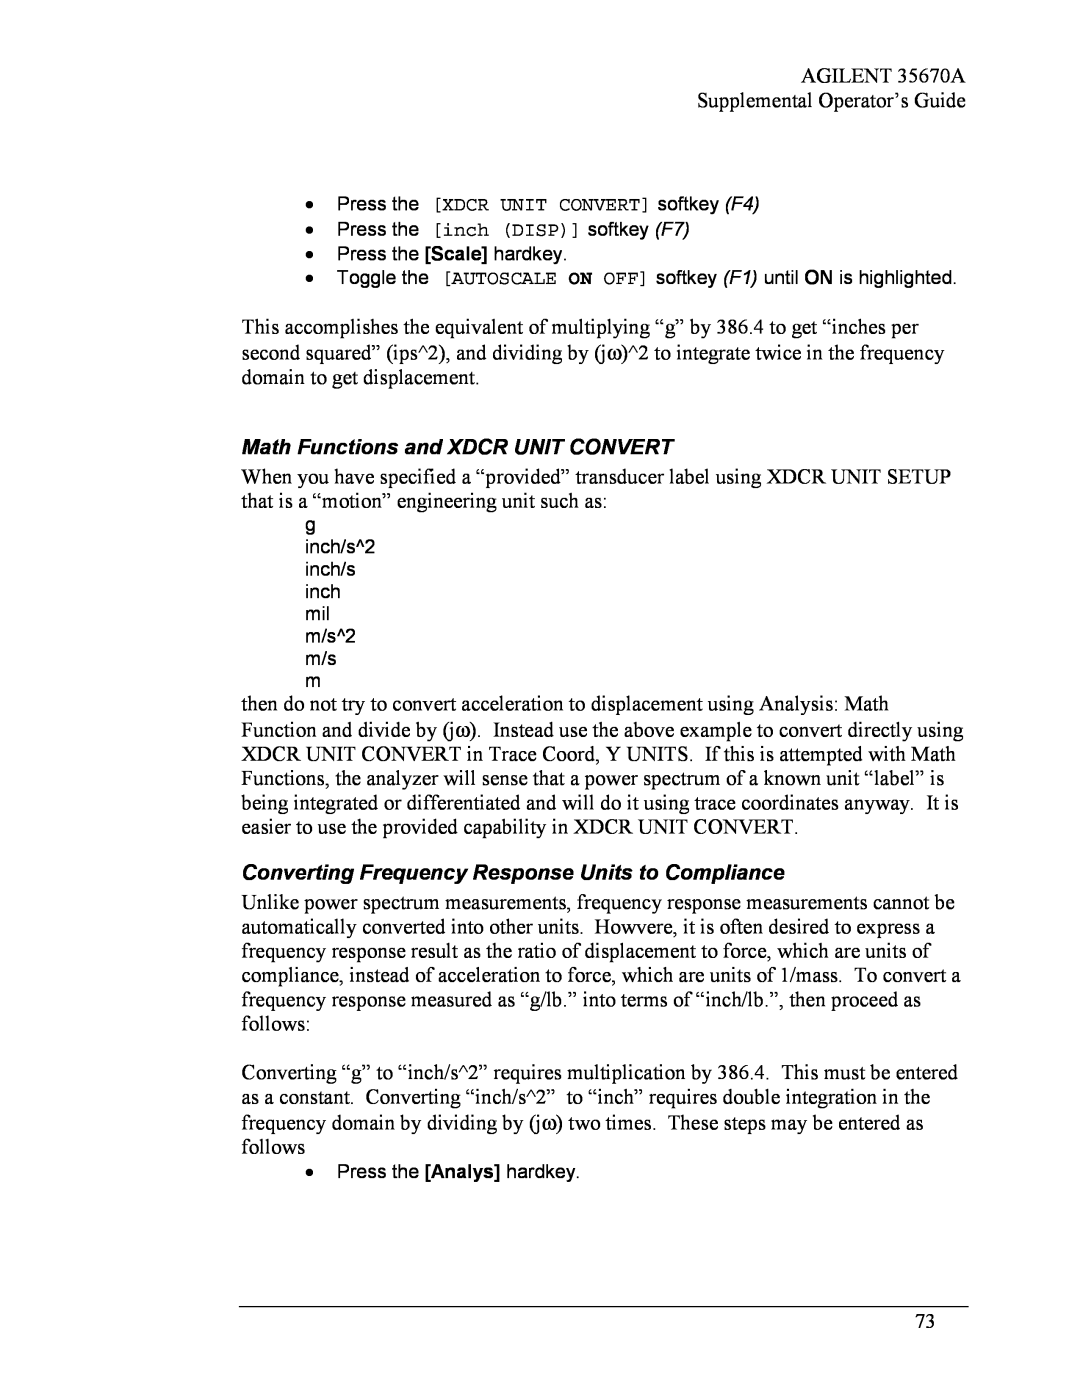 Agilent Technologies Agilent 35670A manual Math Functions and XDCR UNIT CONVERT 